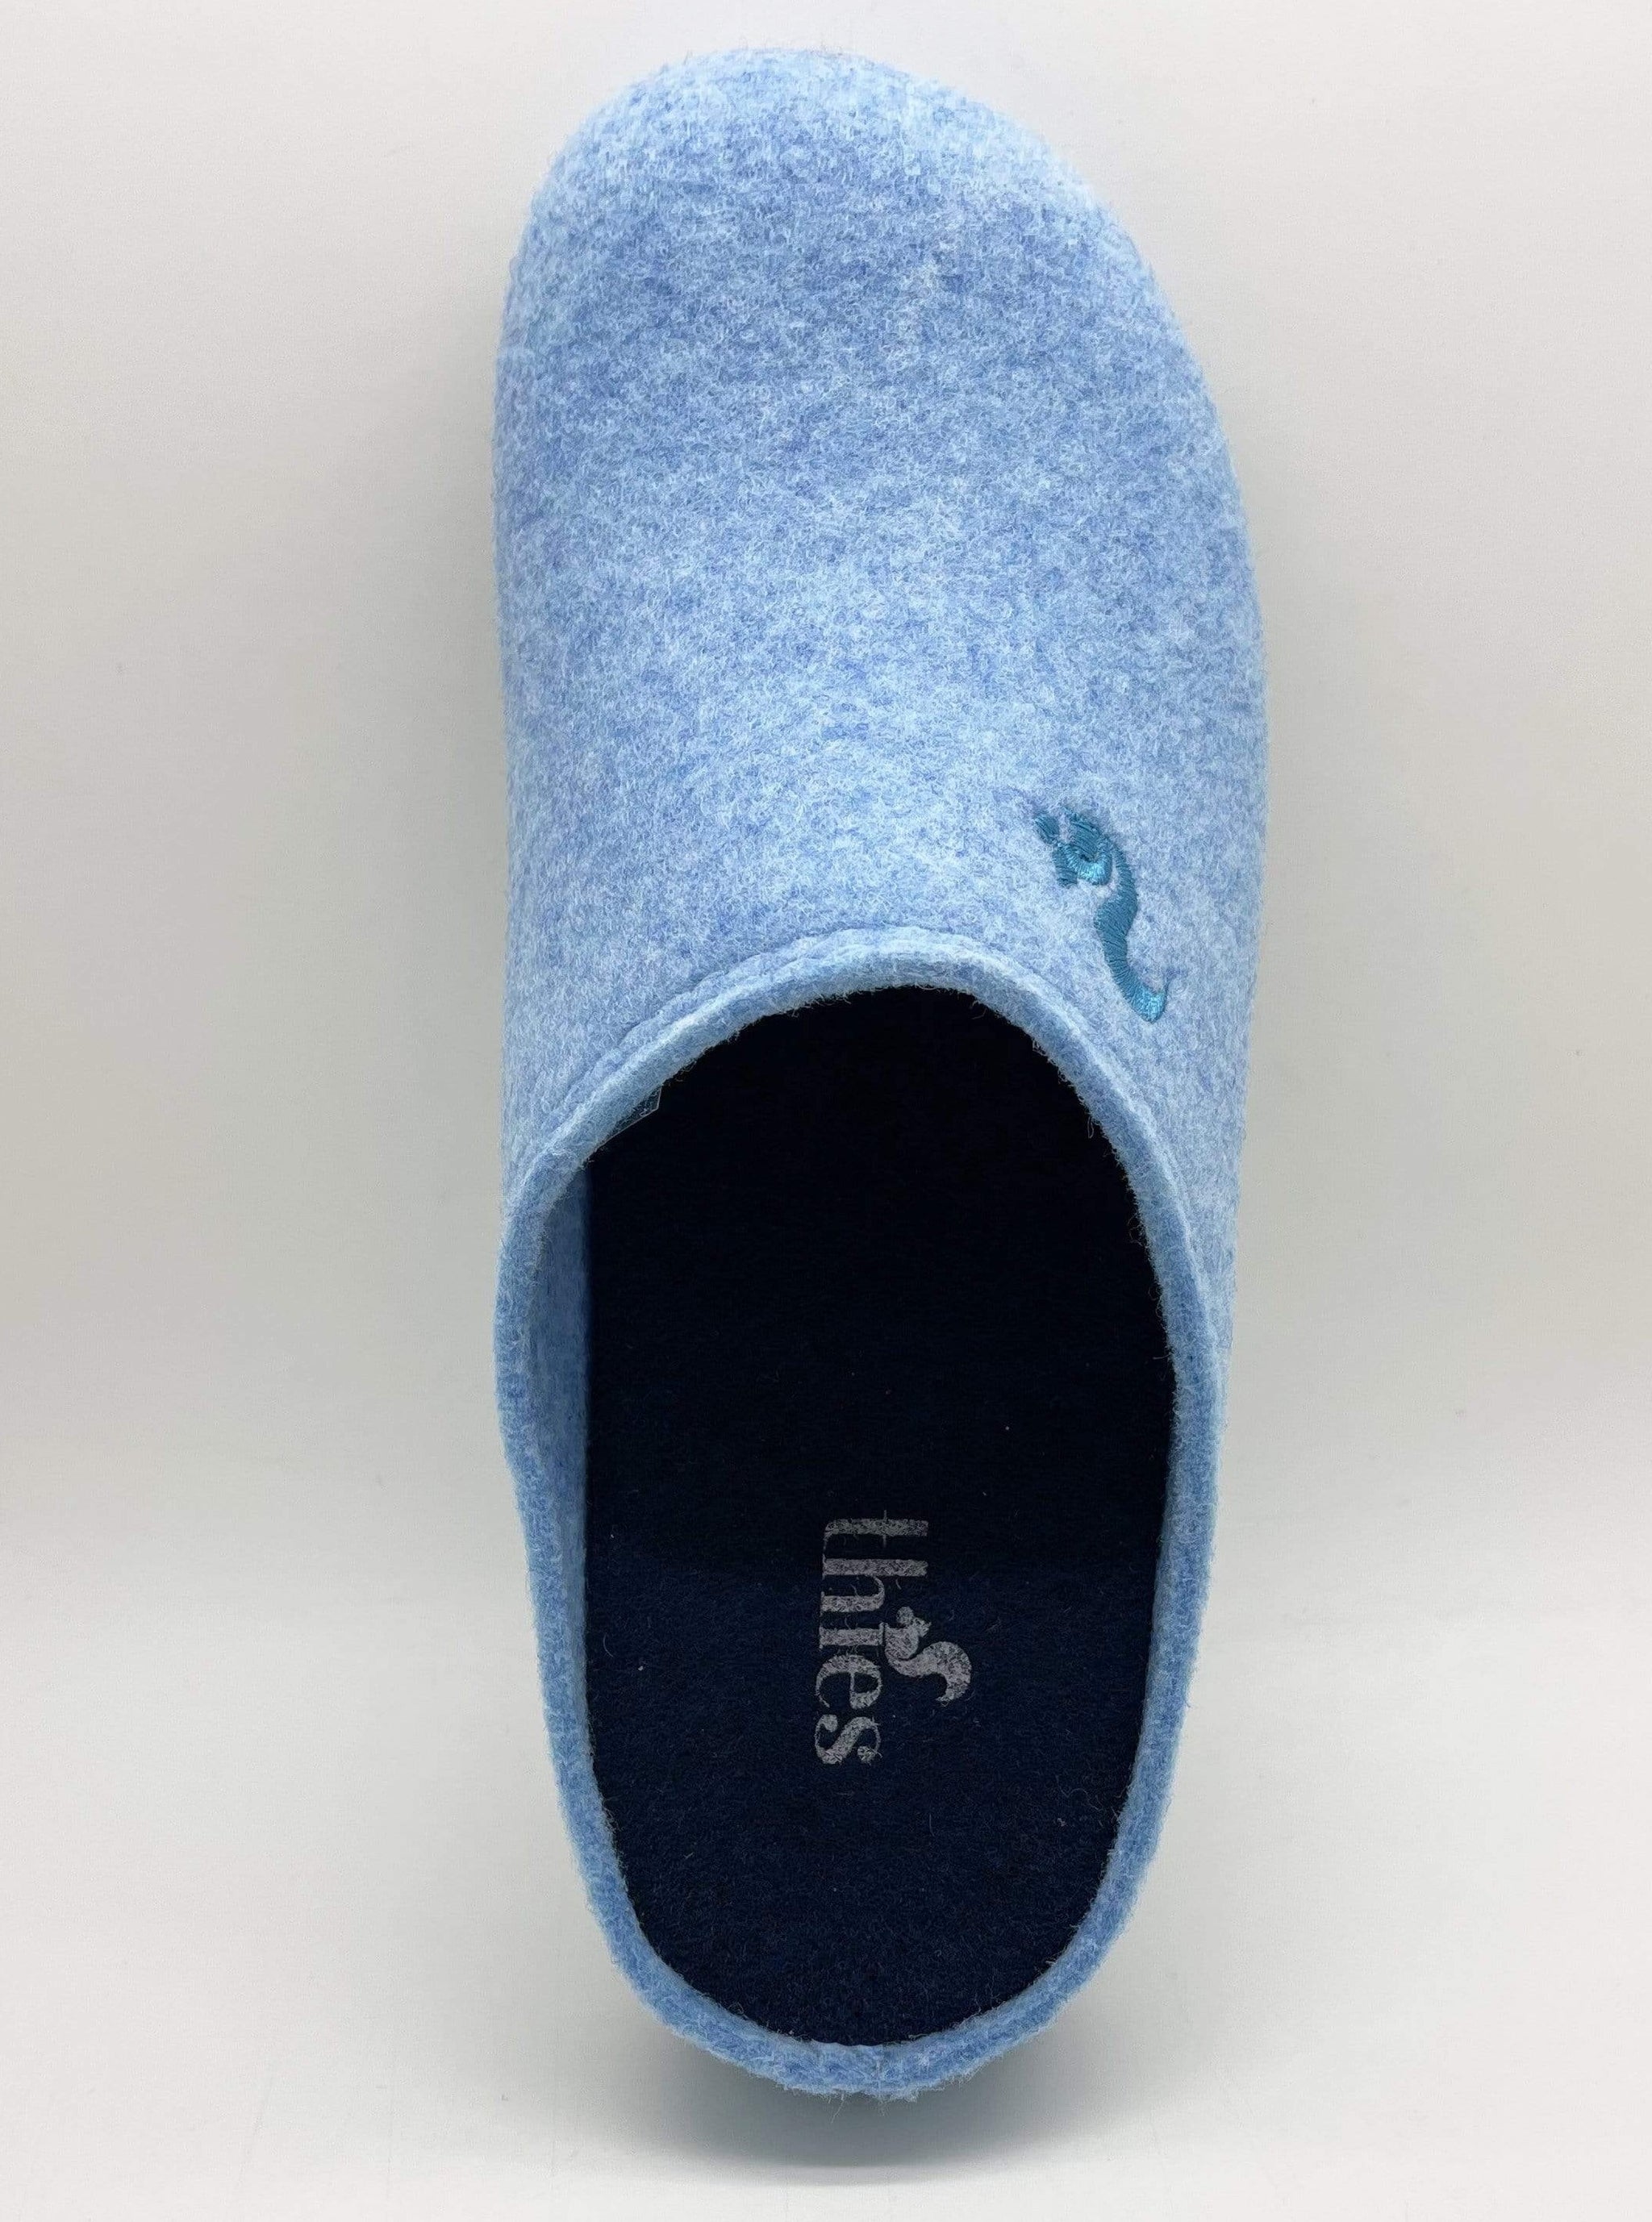 NAT 2 calzado thies 1856 ® Zapatilla de PET reciclado vegano azul claro (W / X) moda sostenible moda ética